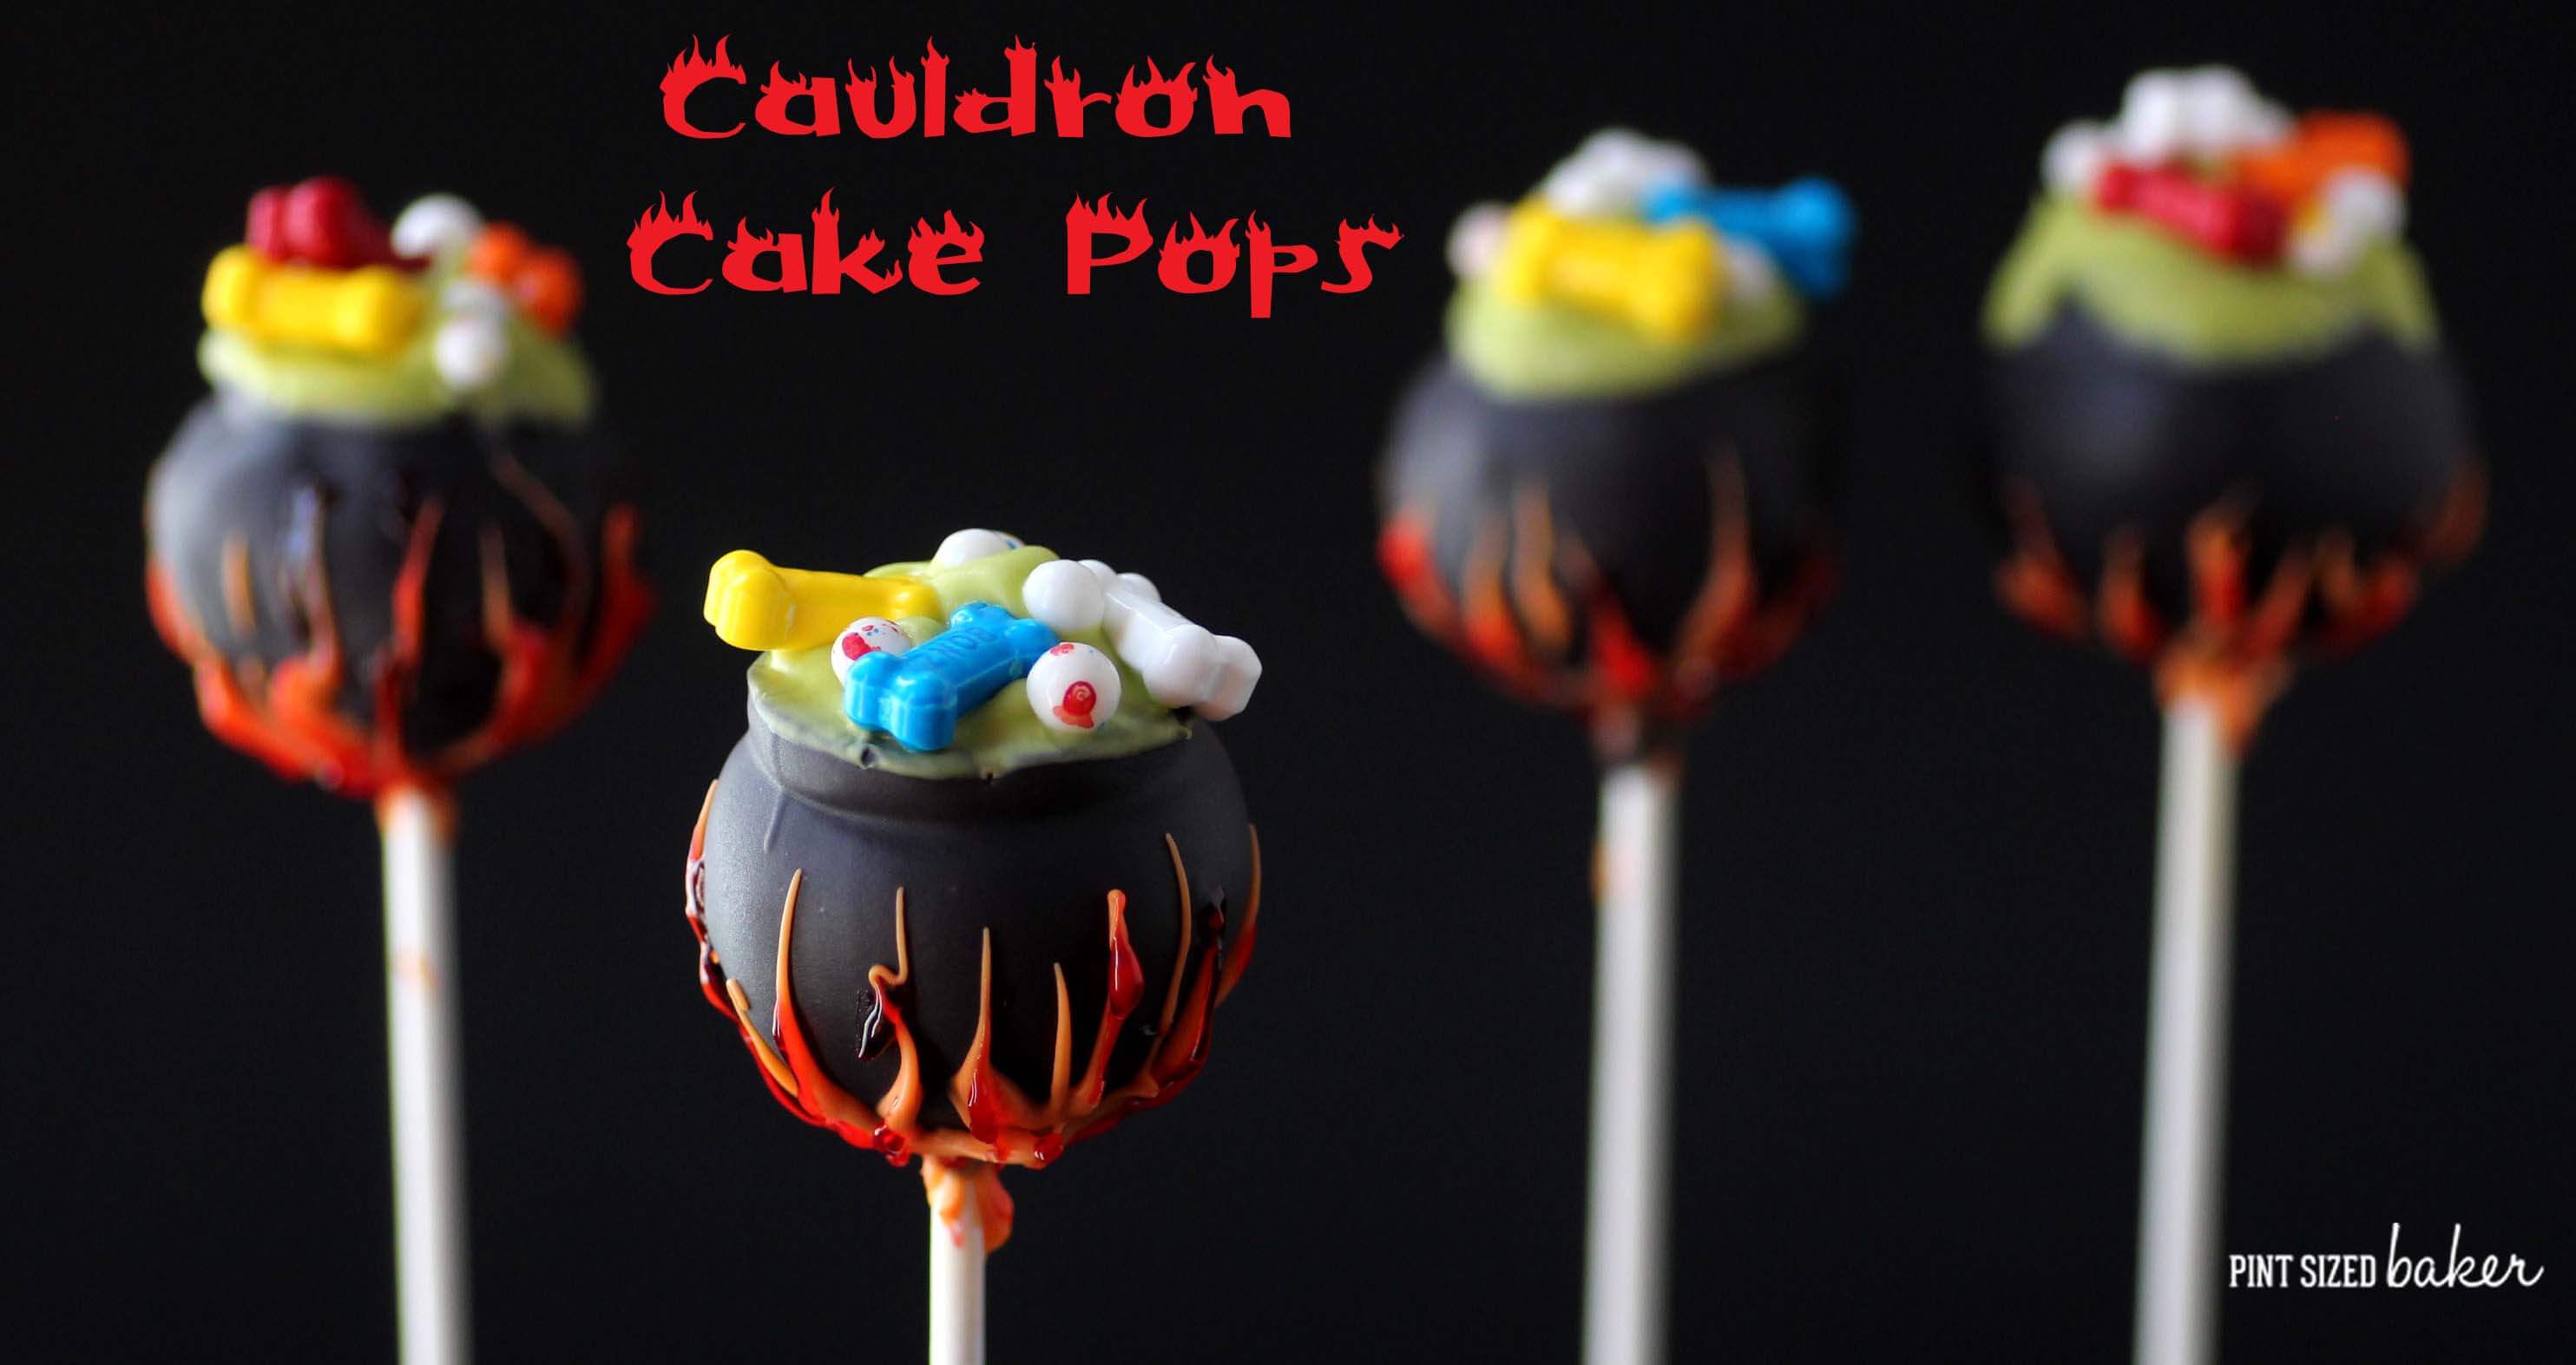 How to Make Cauldron Cake Pops